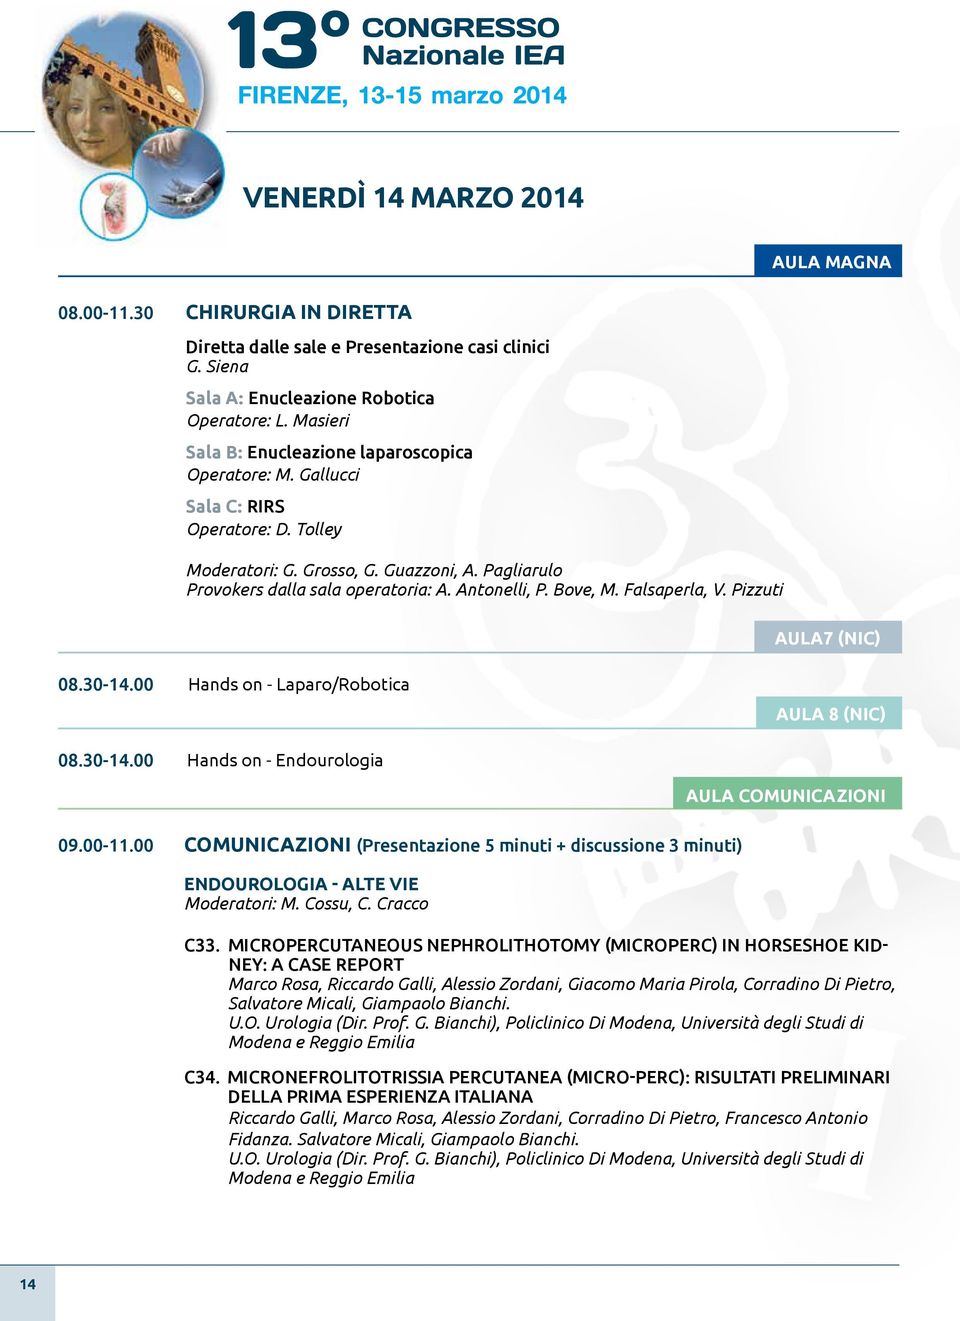 Bove, M. Falsaperla, V. Pizzuti AULA7 (NIC) 08.30-14.00 Hands on - Laparo/Robotica Aula 8 (NIC) 08.30-14.00 Hands on - Endourologia AULA COMUNICAZIONI 09.00-11.